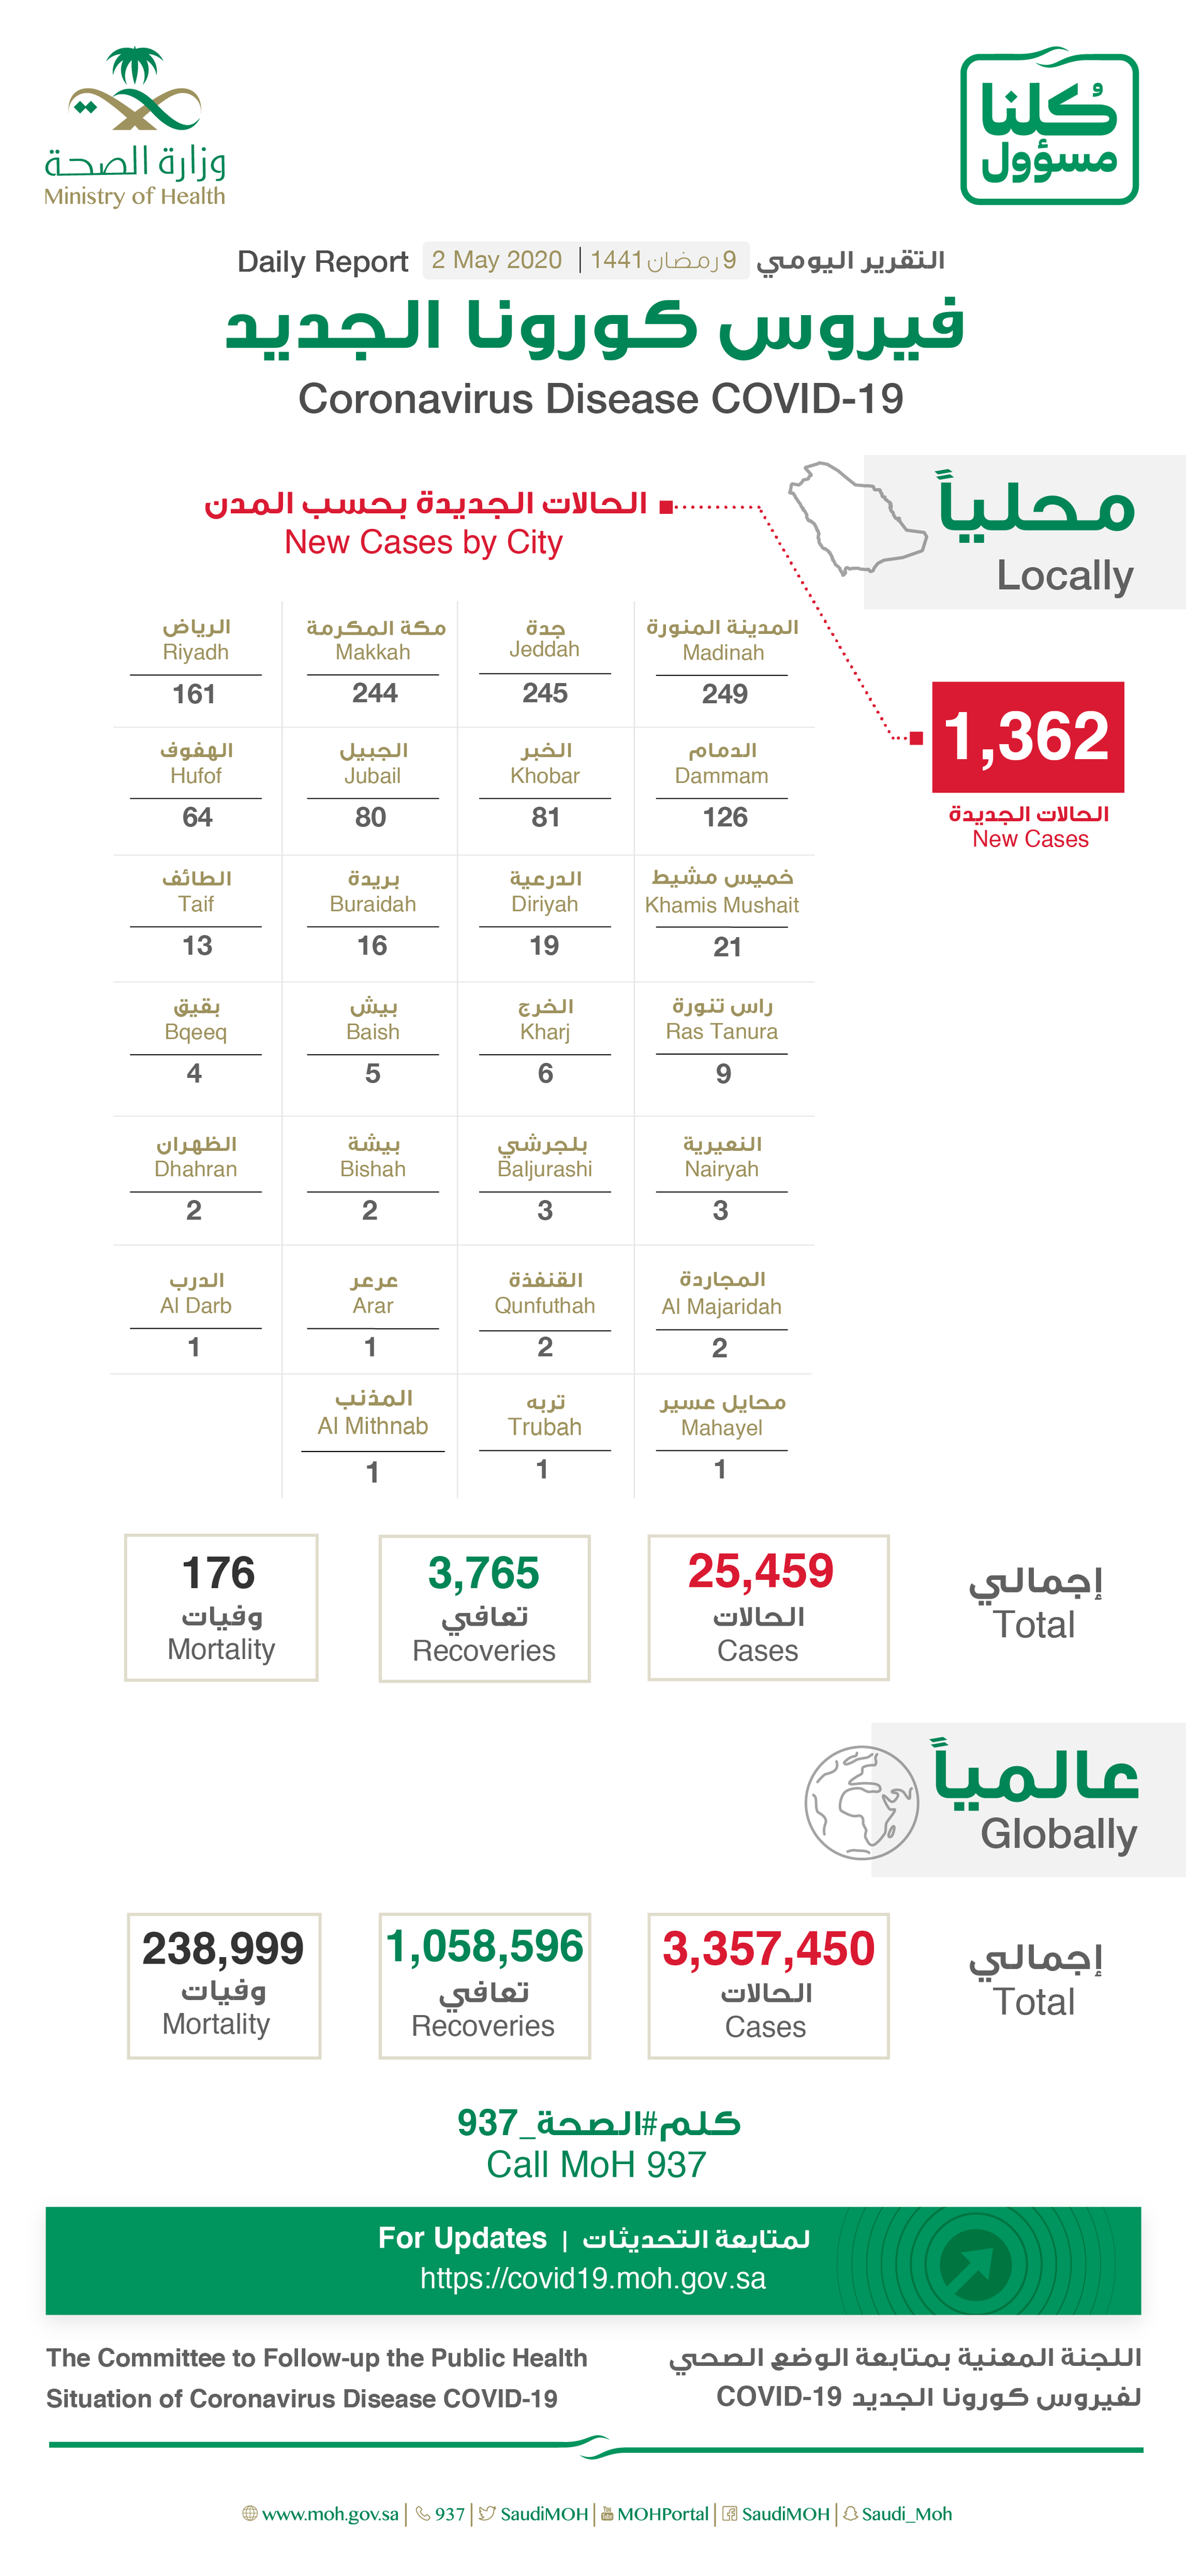 Saudi Arabia Covid-19 : Total Cases : 25459, New Cases :1362